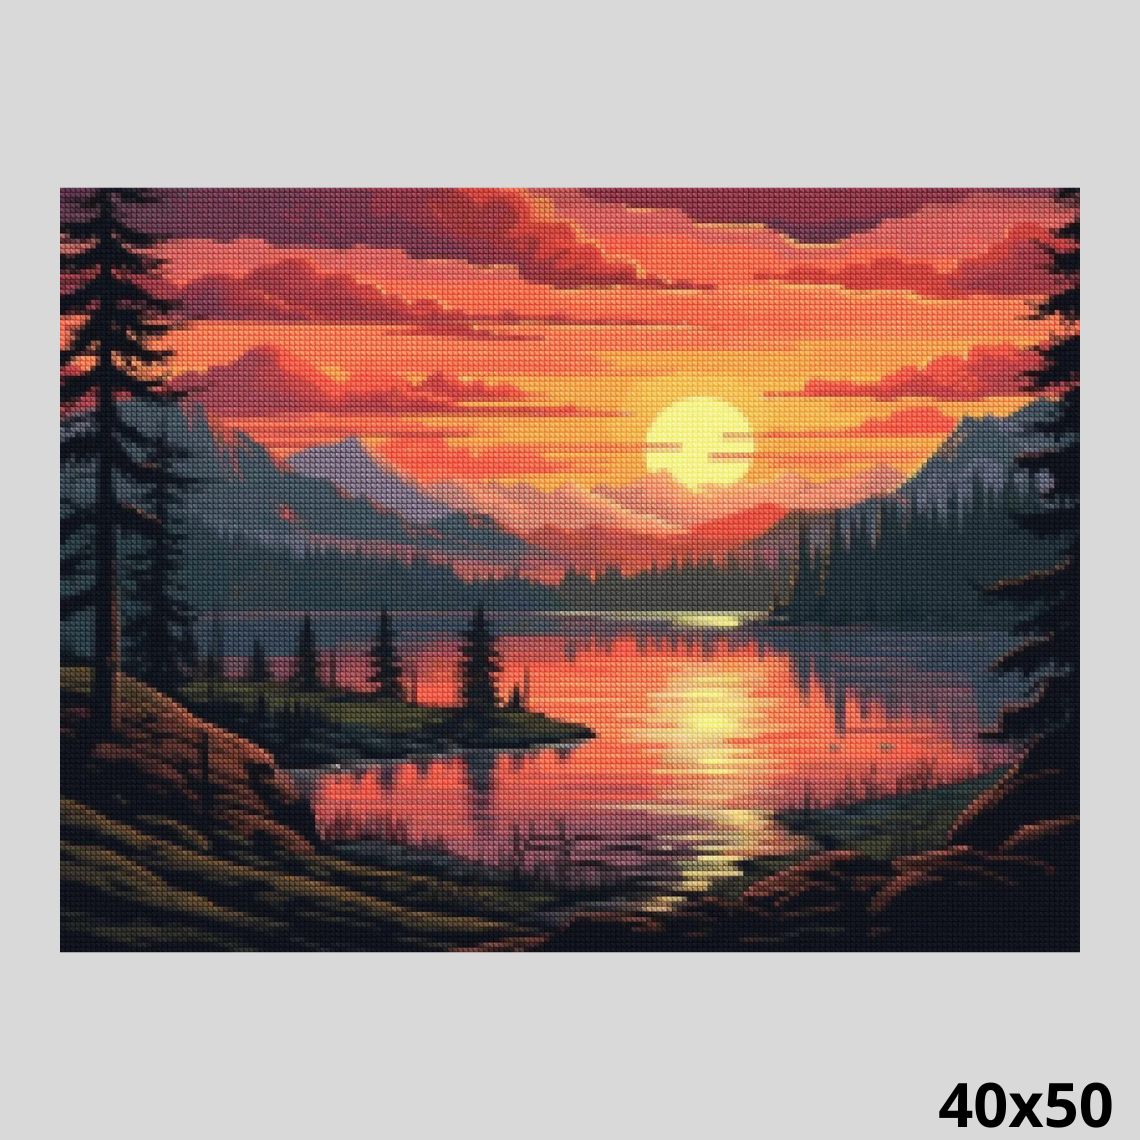 Pink Sunset at Lake 40x50 - Diamond Painting